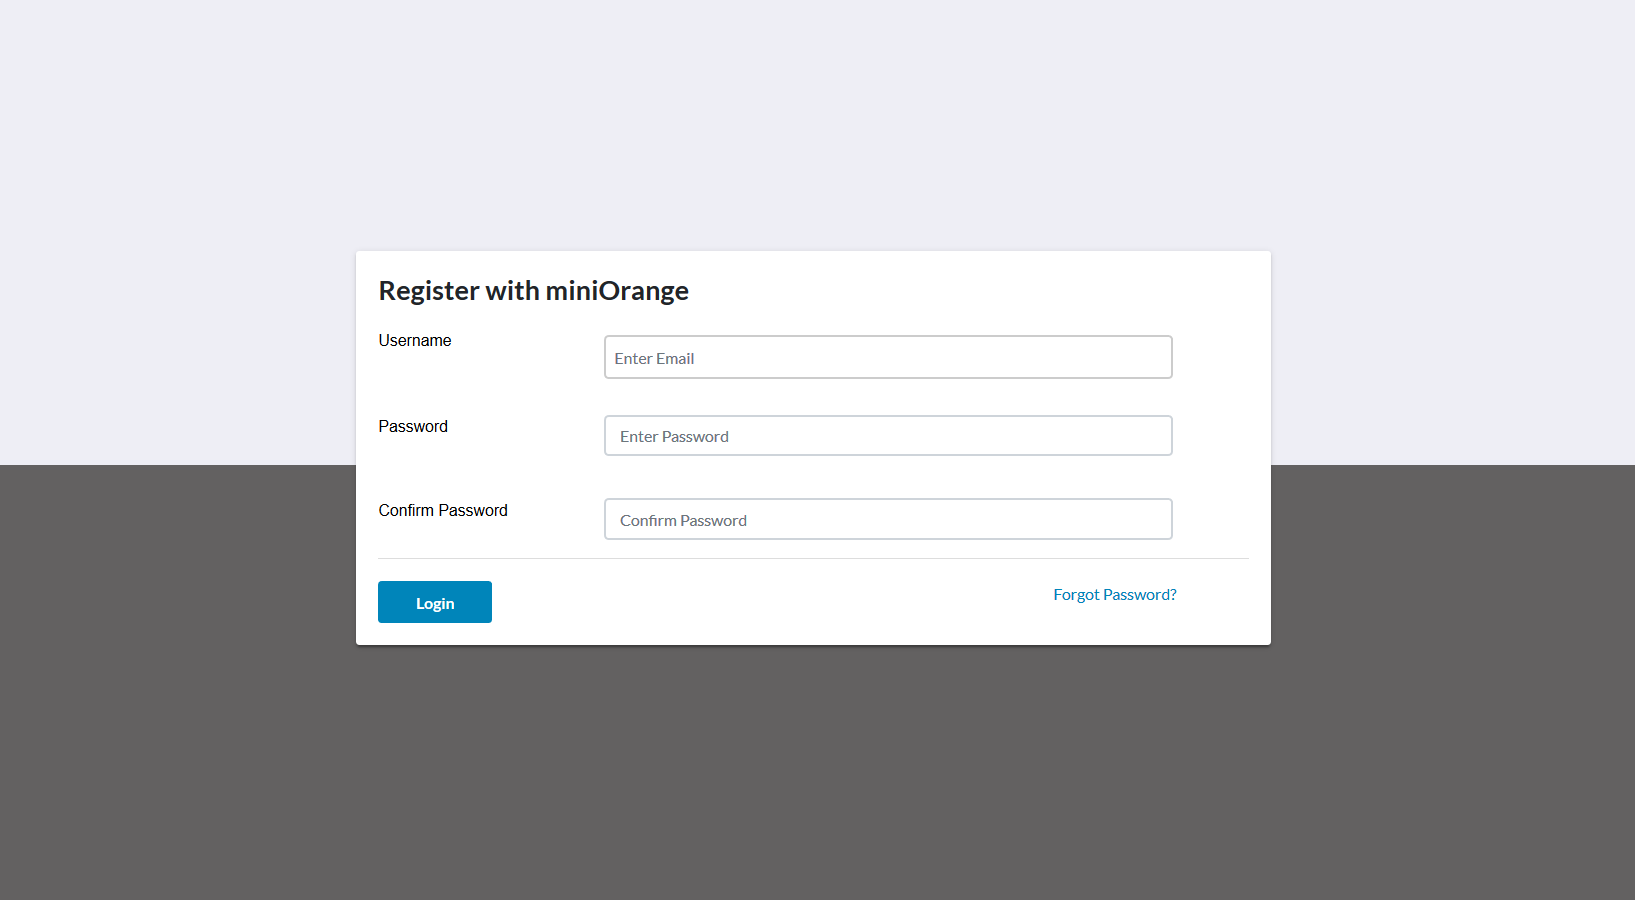 ASP.NET keycloak OAuth SSO - register with miniorange